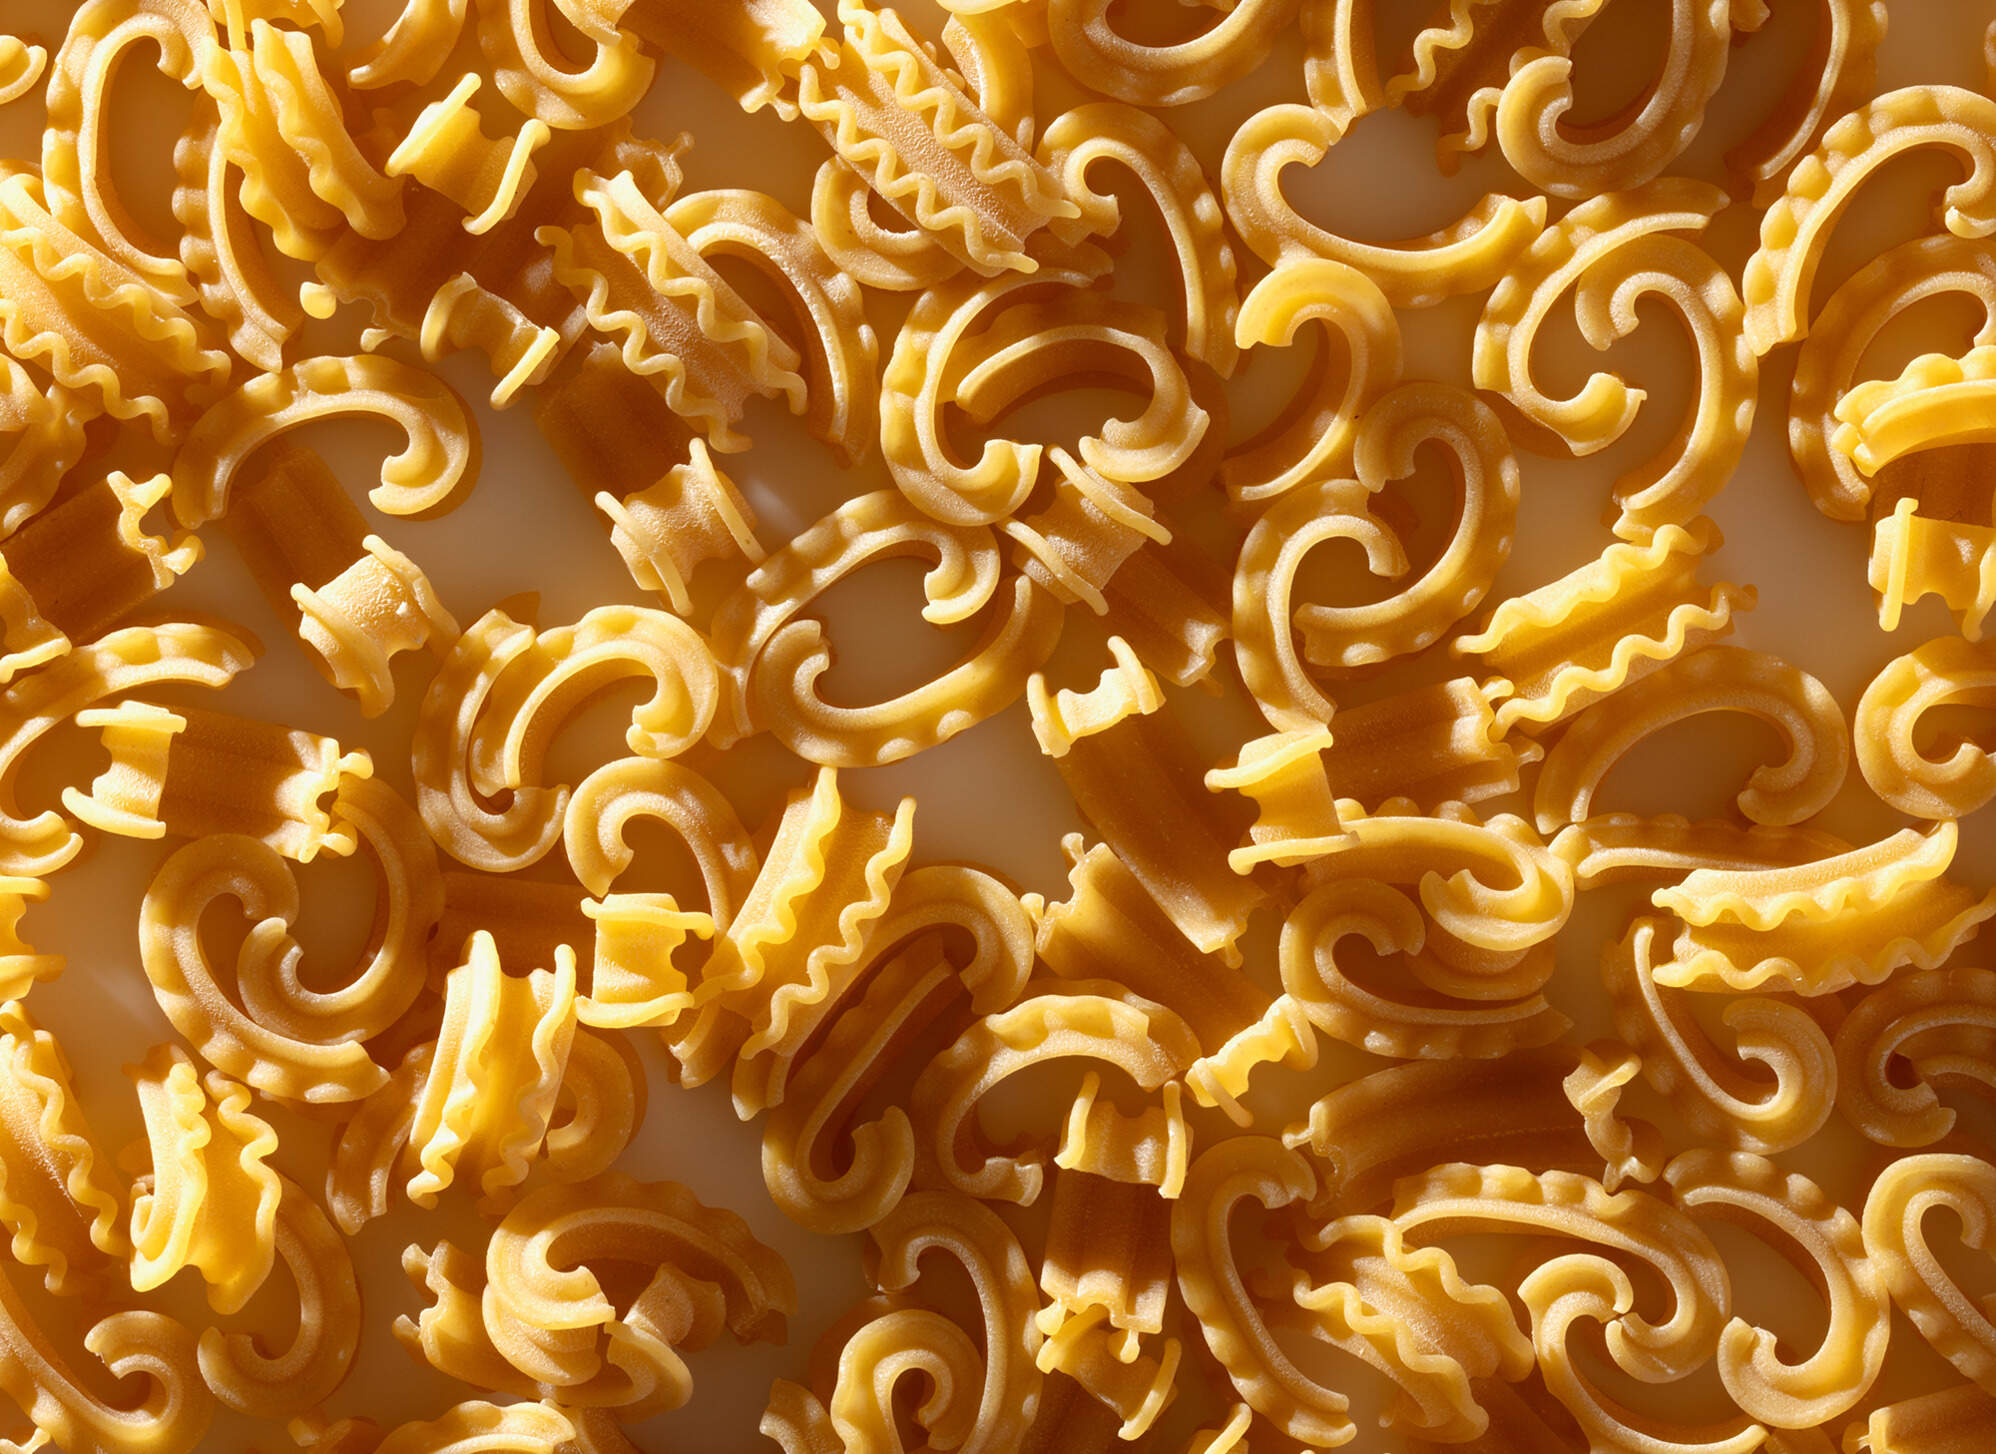 Dan Pashman invented a new pasta shape called cascatelli. (Courtesy)